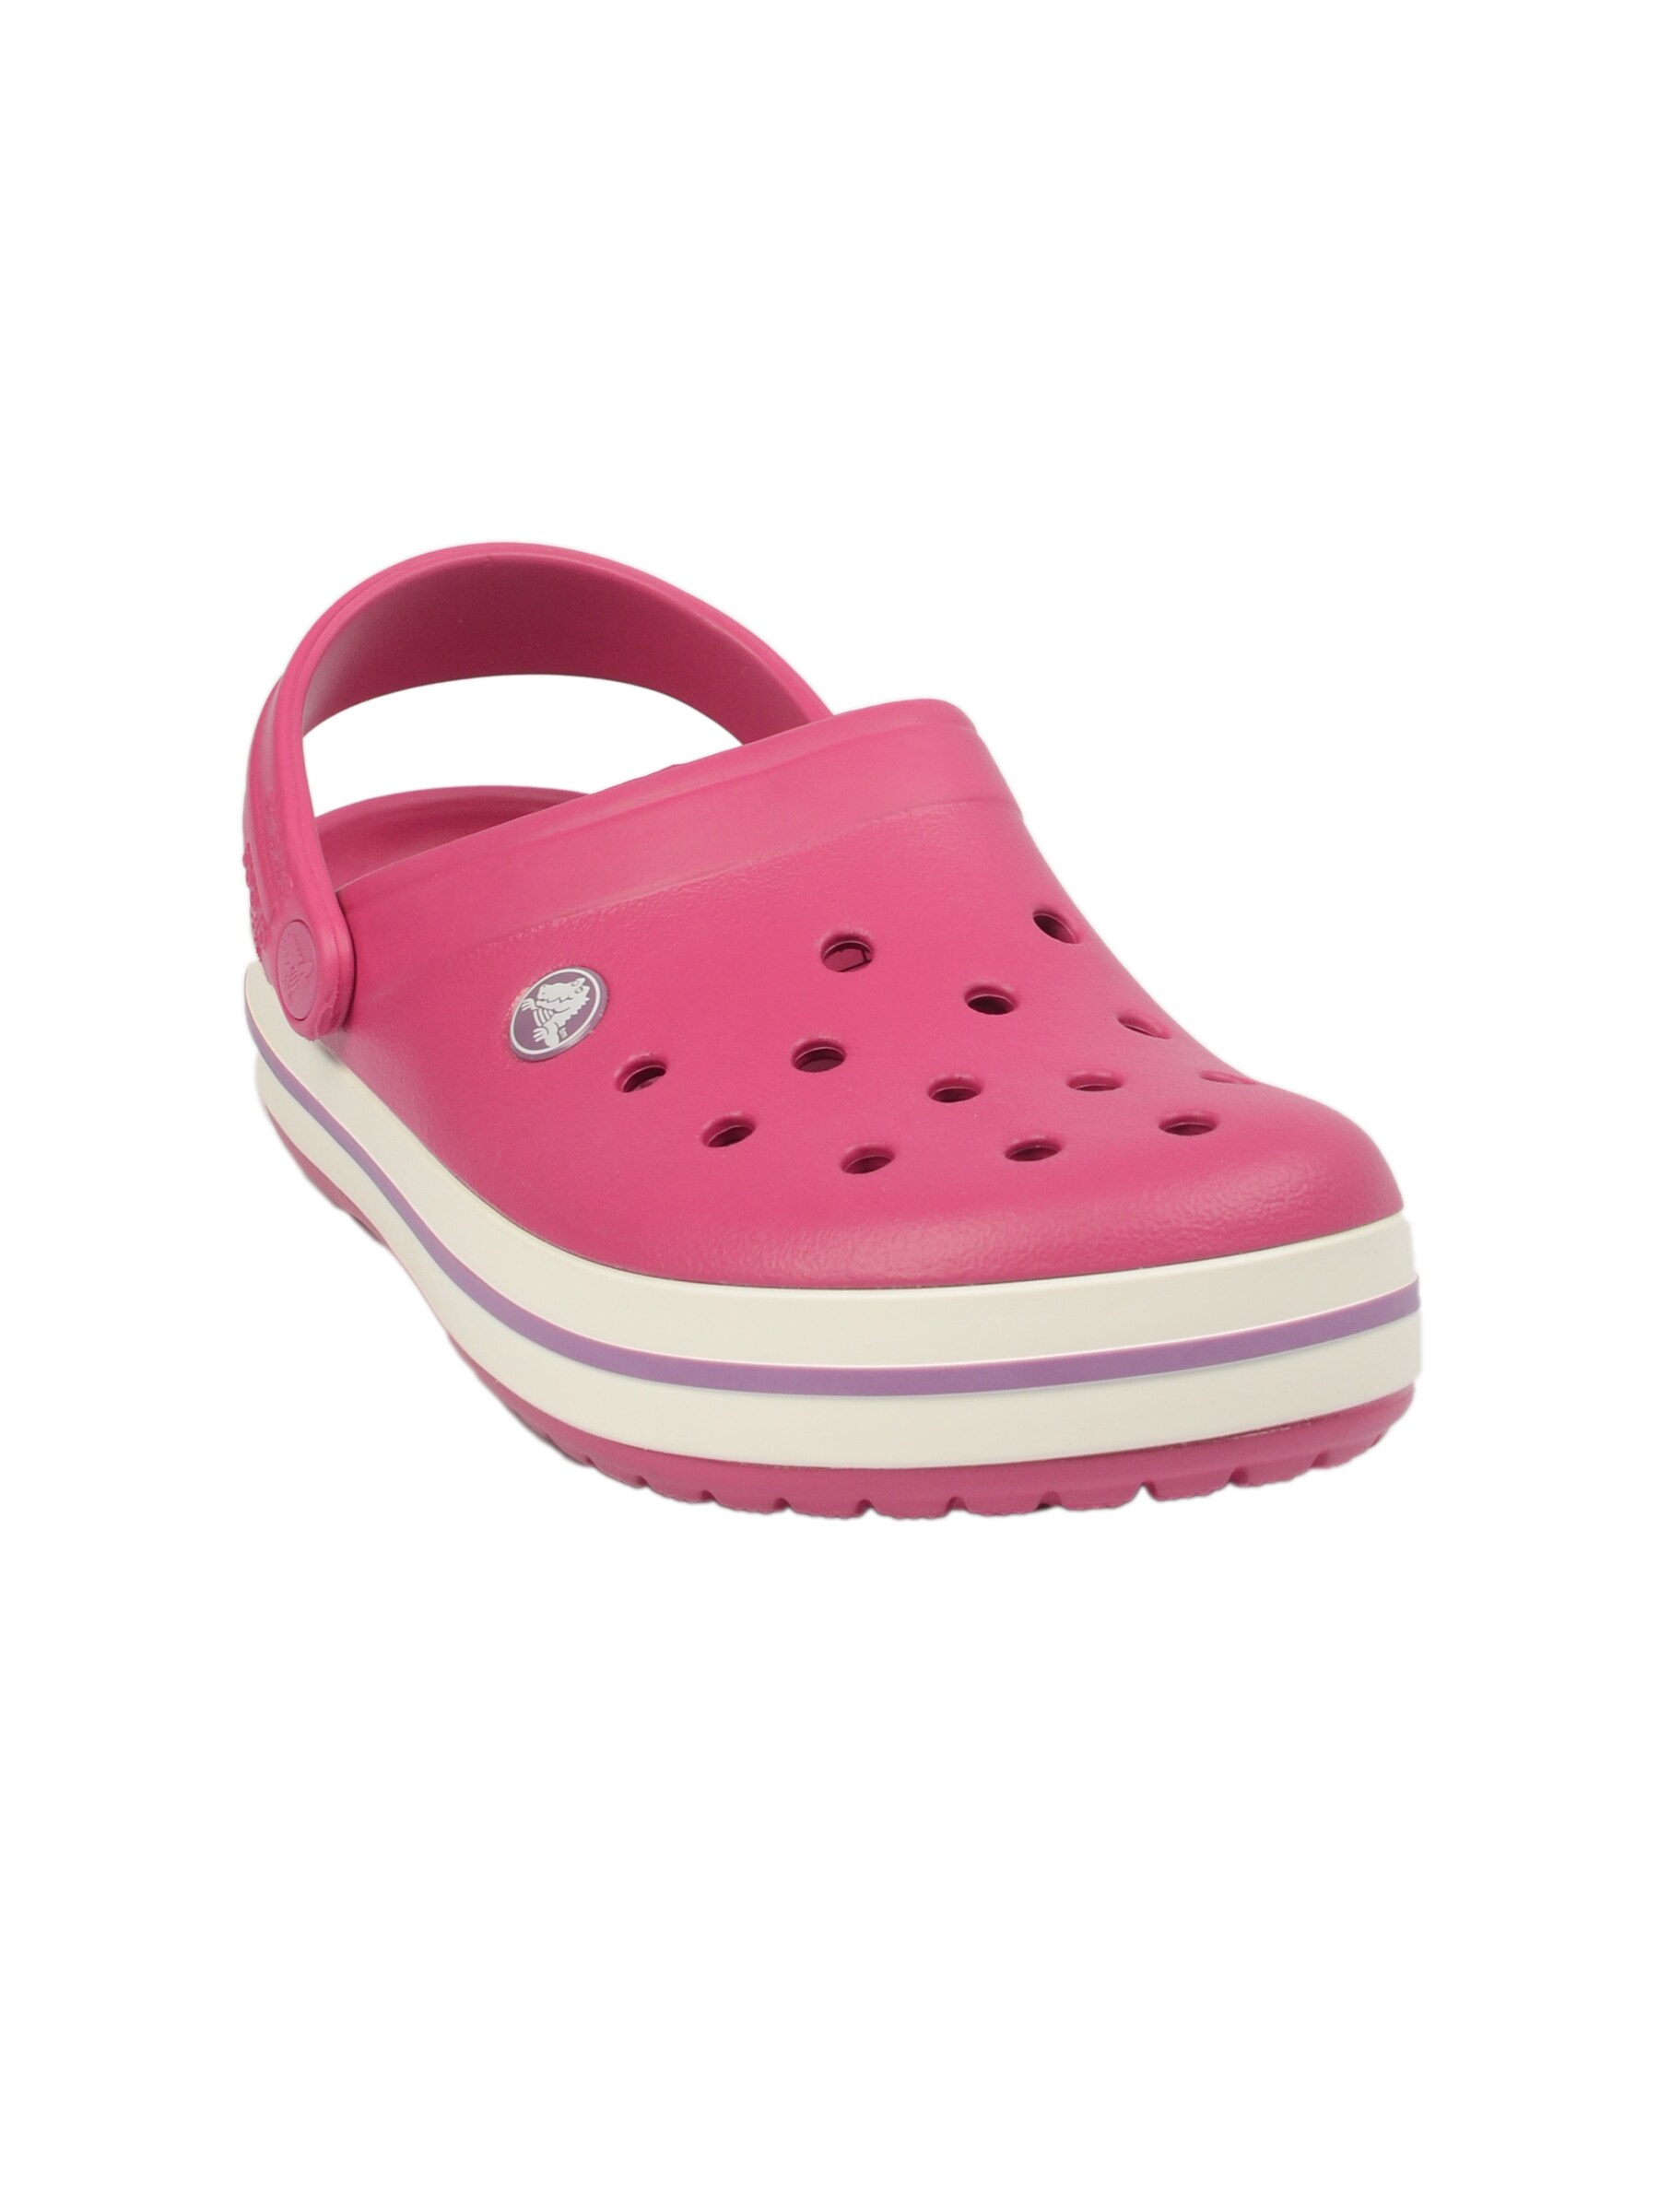 Crocs Crocband Pink Sandals